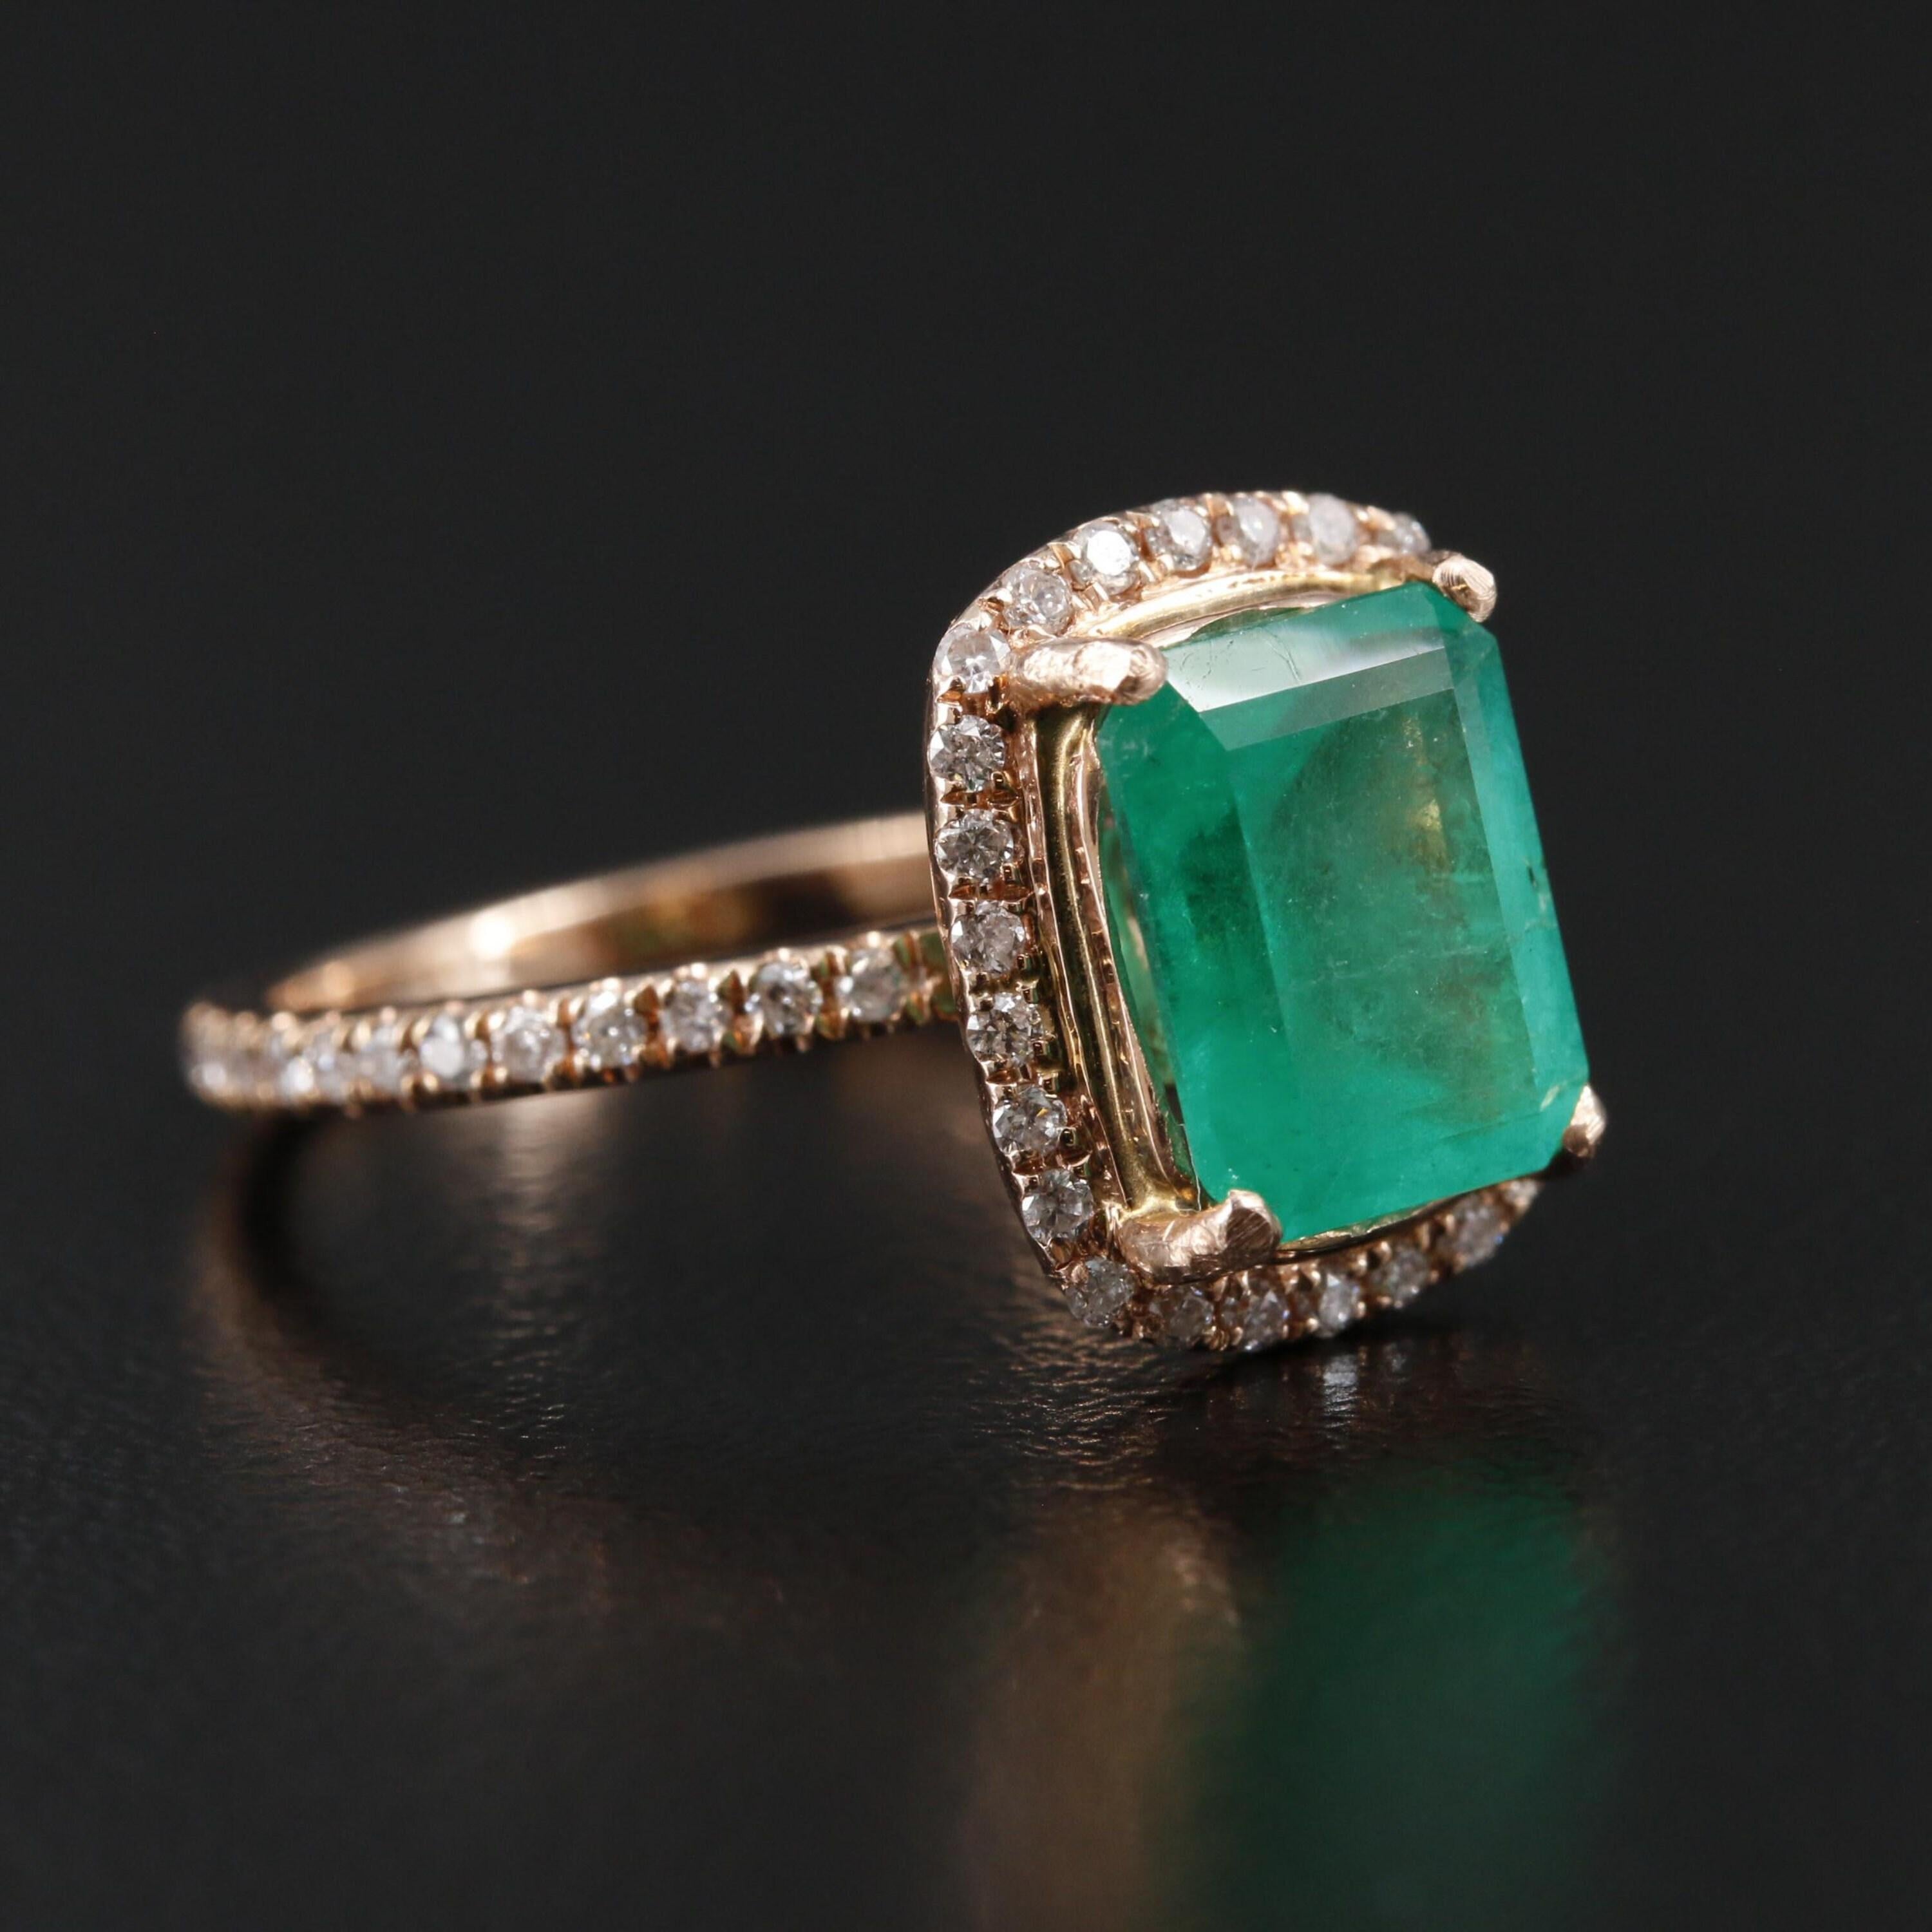 For Sale:  Unique Emerald Engagement Ring, - Antique Emerald Wedding Ring 5